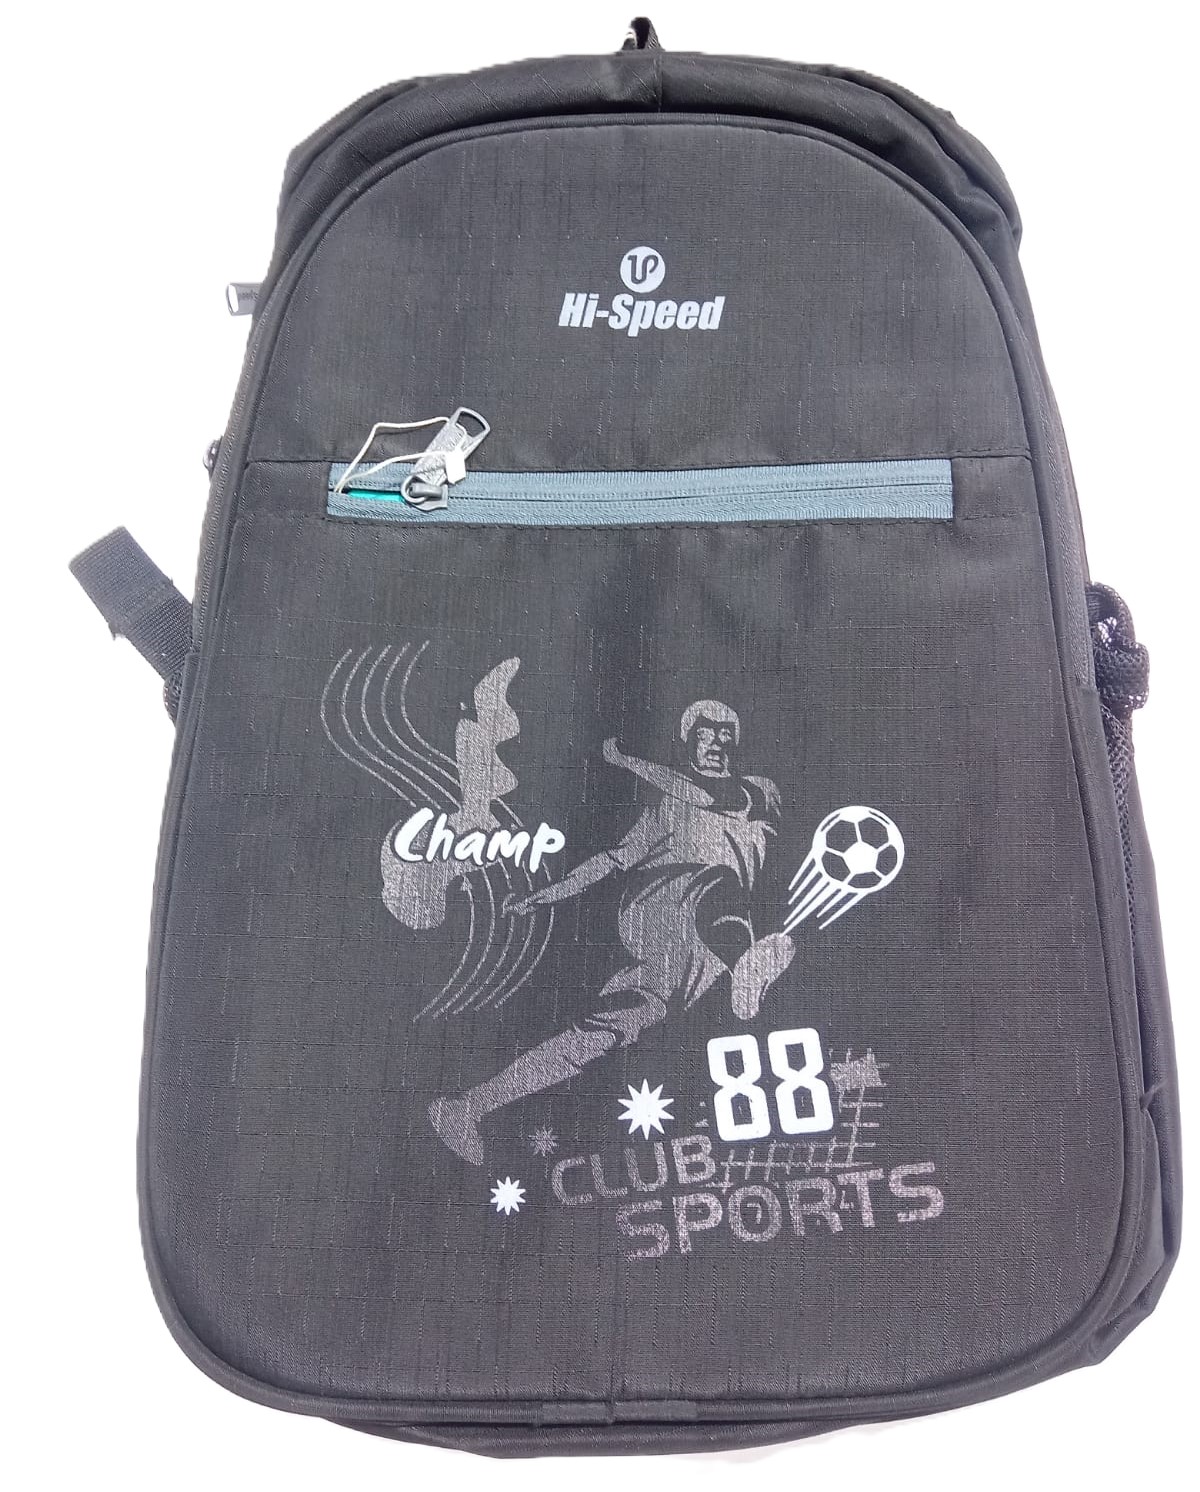 Hi-Speed FootBall Champ School Bag